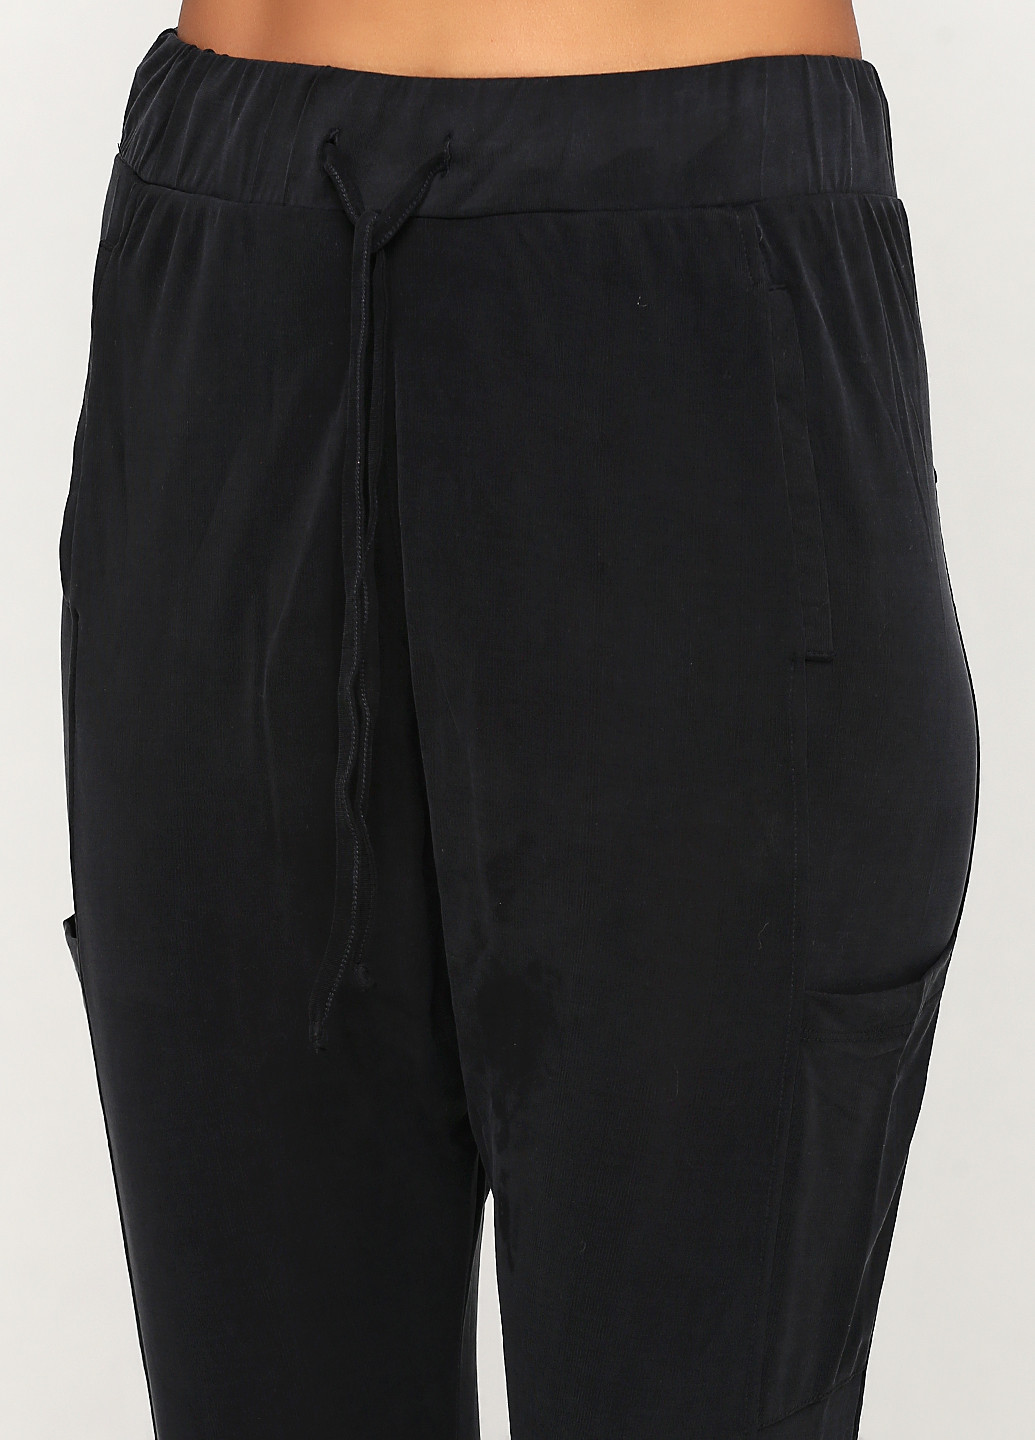 Черные кэжуал демисезонные джоггеры брюки luxury by new denmark